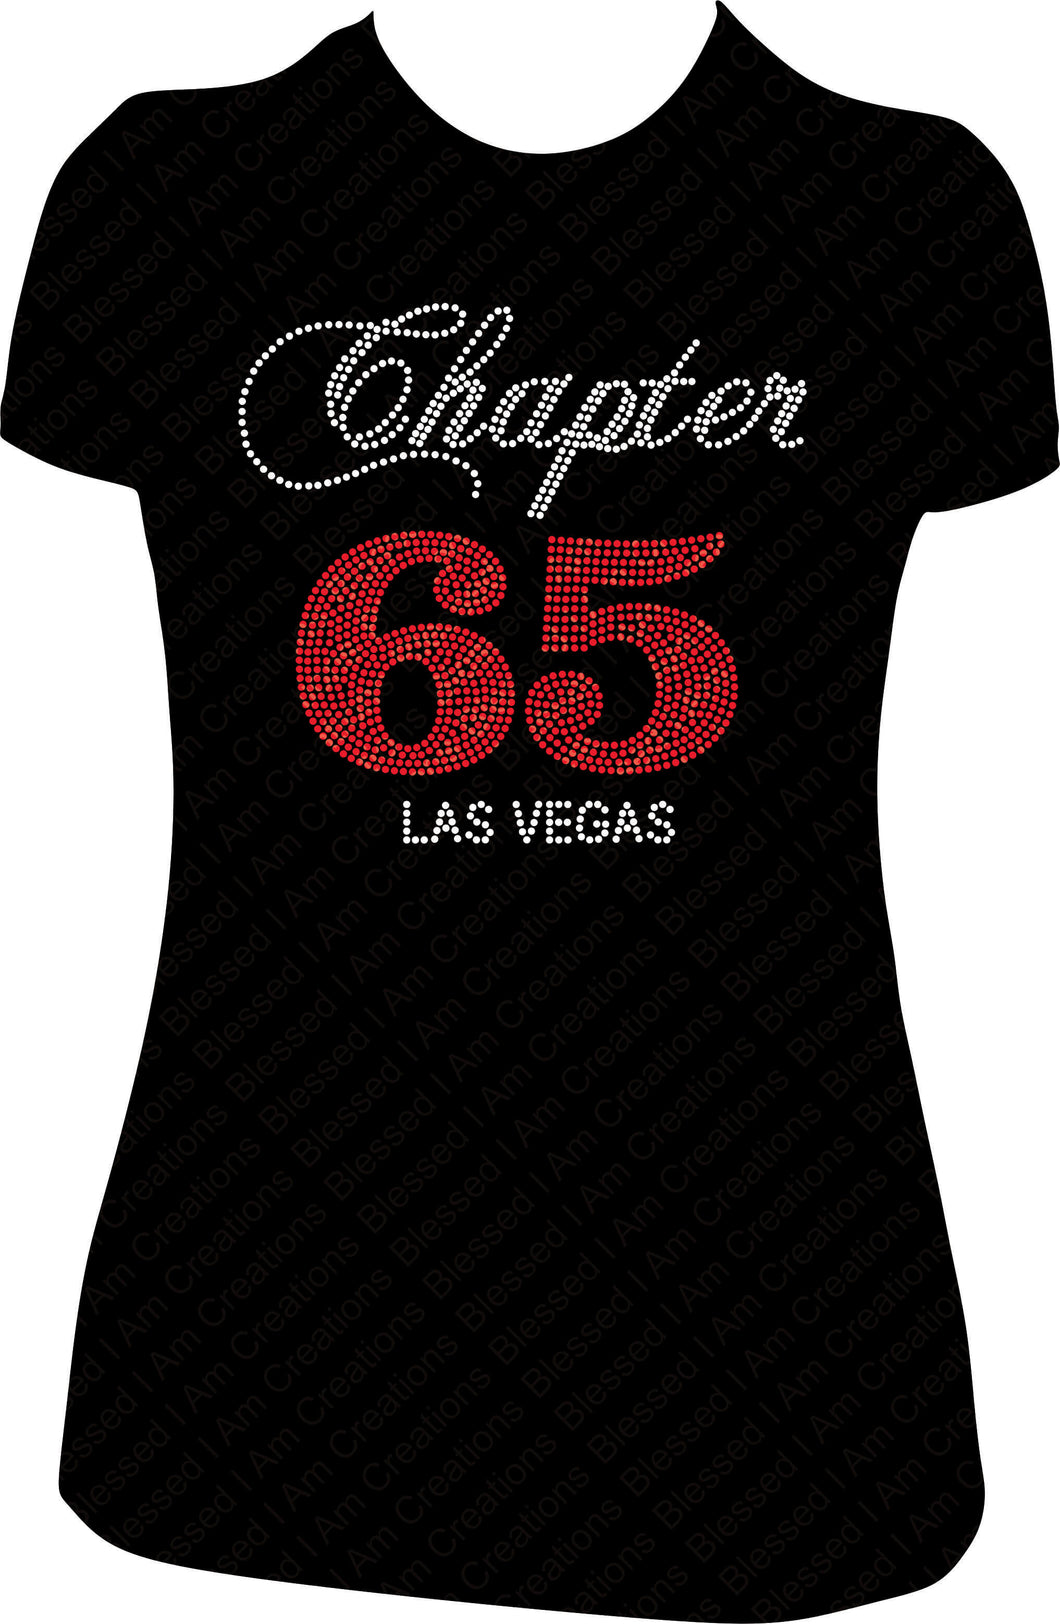 Chapter 65 las vegas shirt, chapter birthday shirt, bling birthday shirt, 65th birthday shirt, 65 birthday shirt